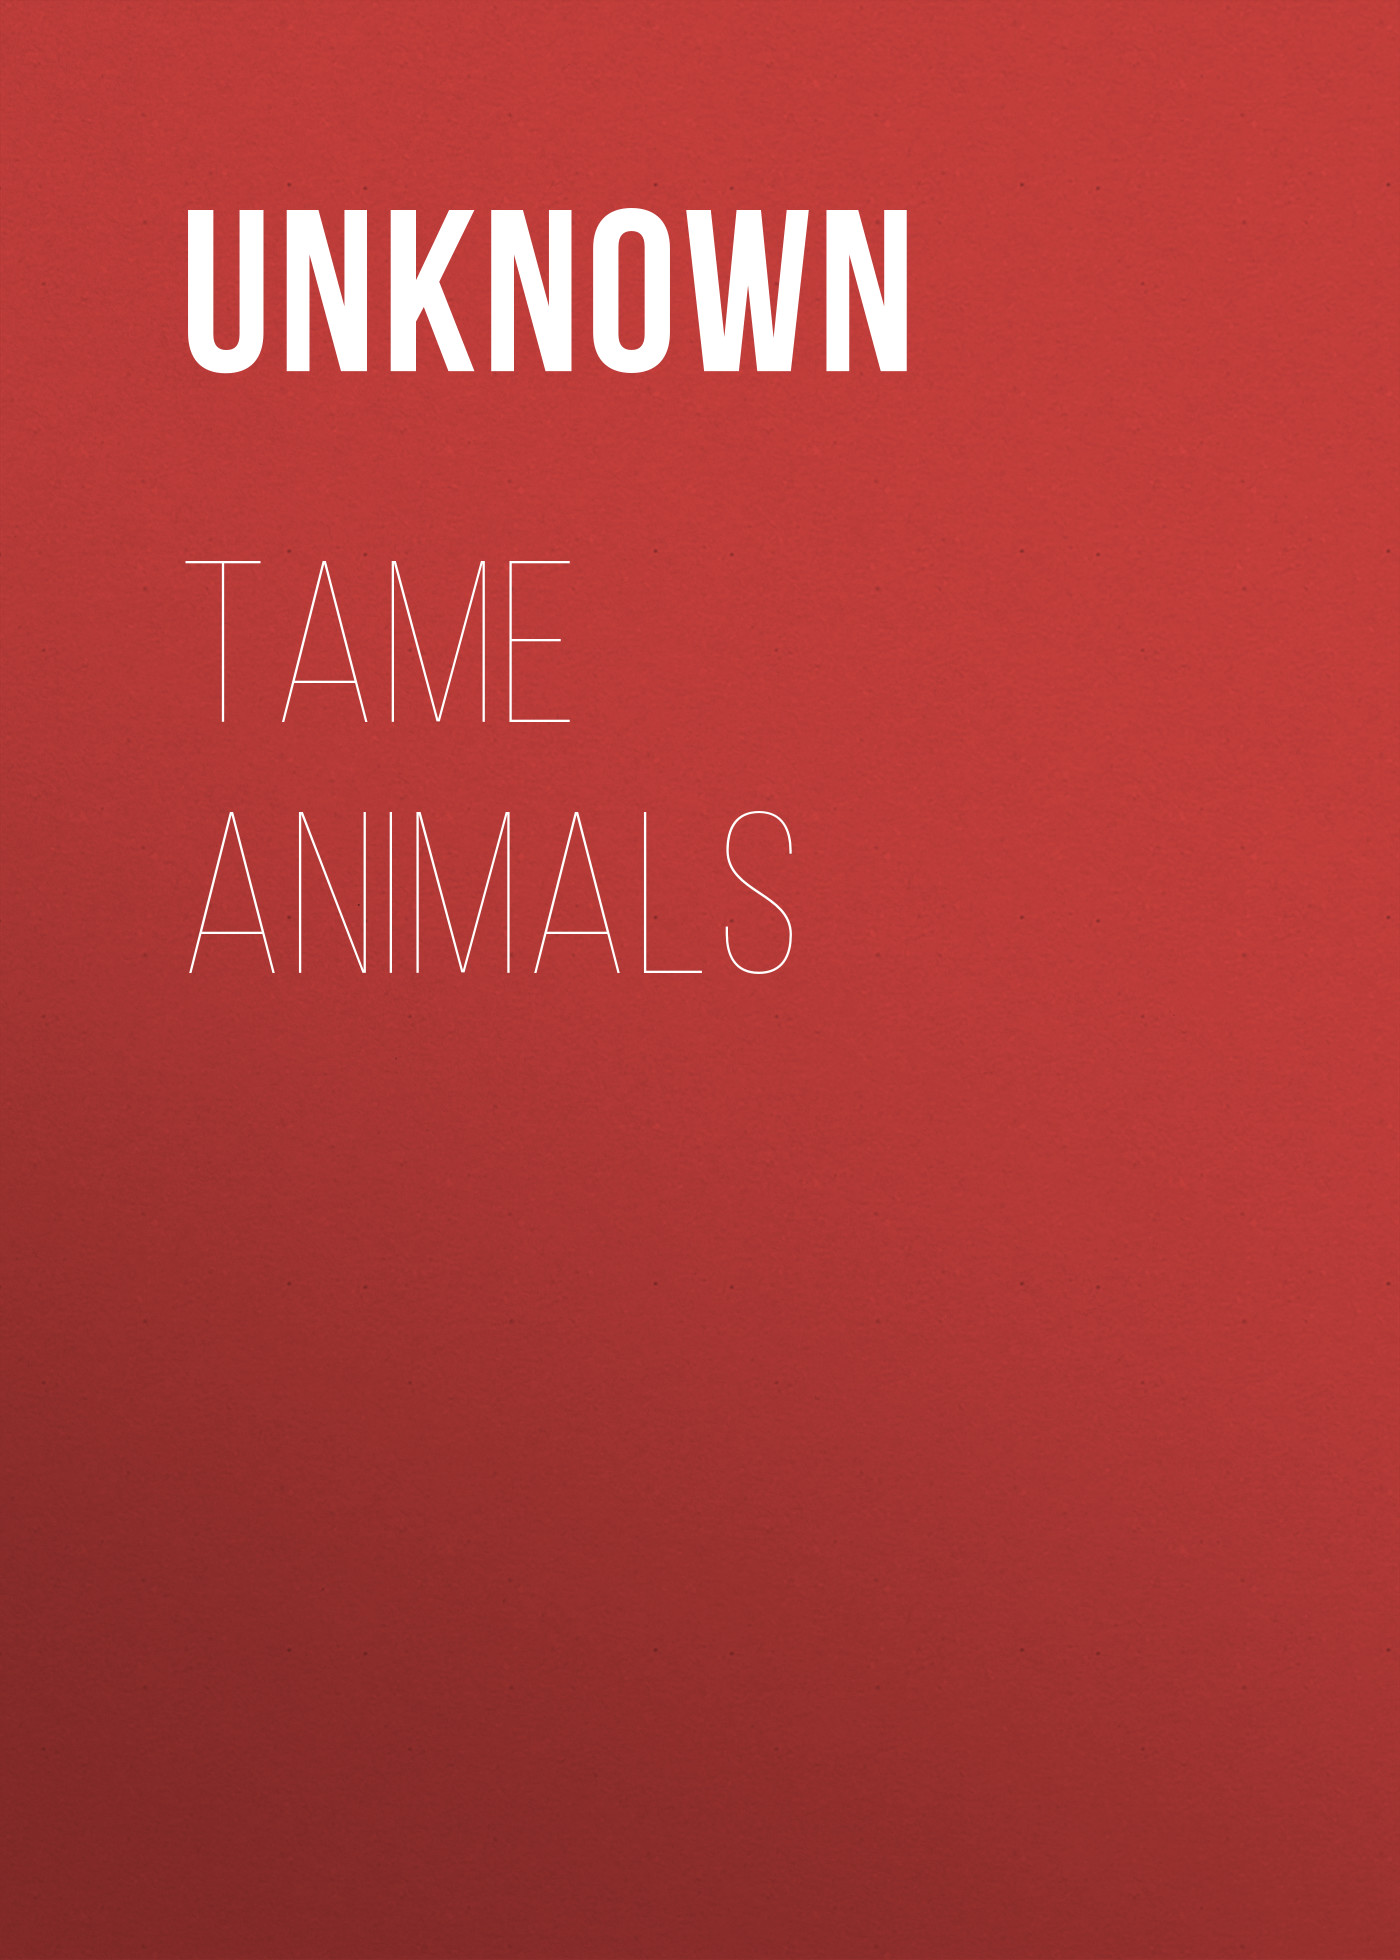 Tame Animals